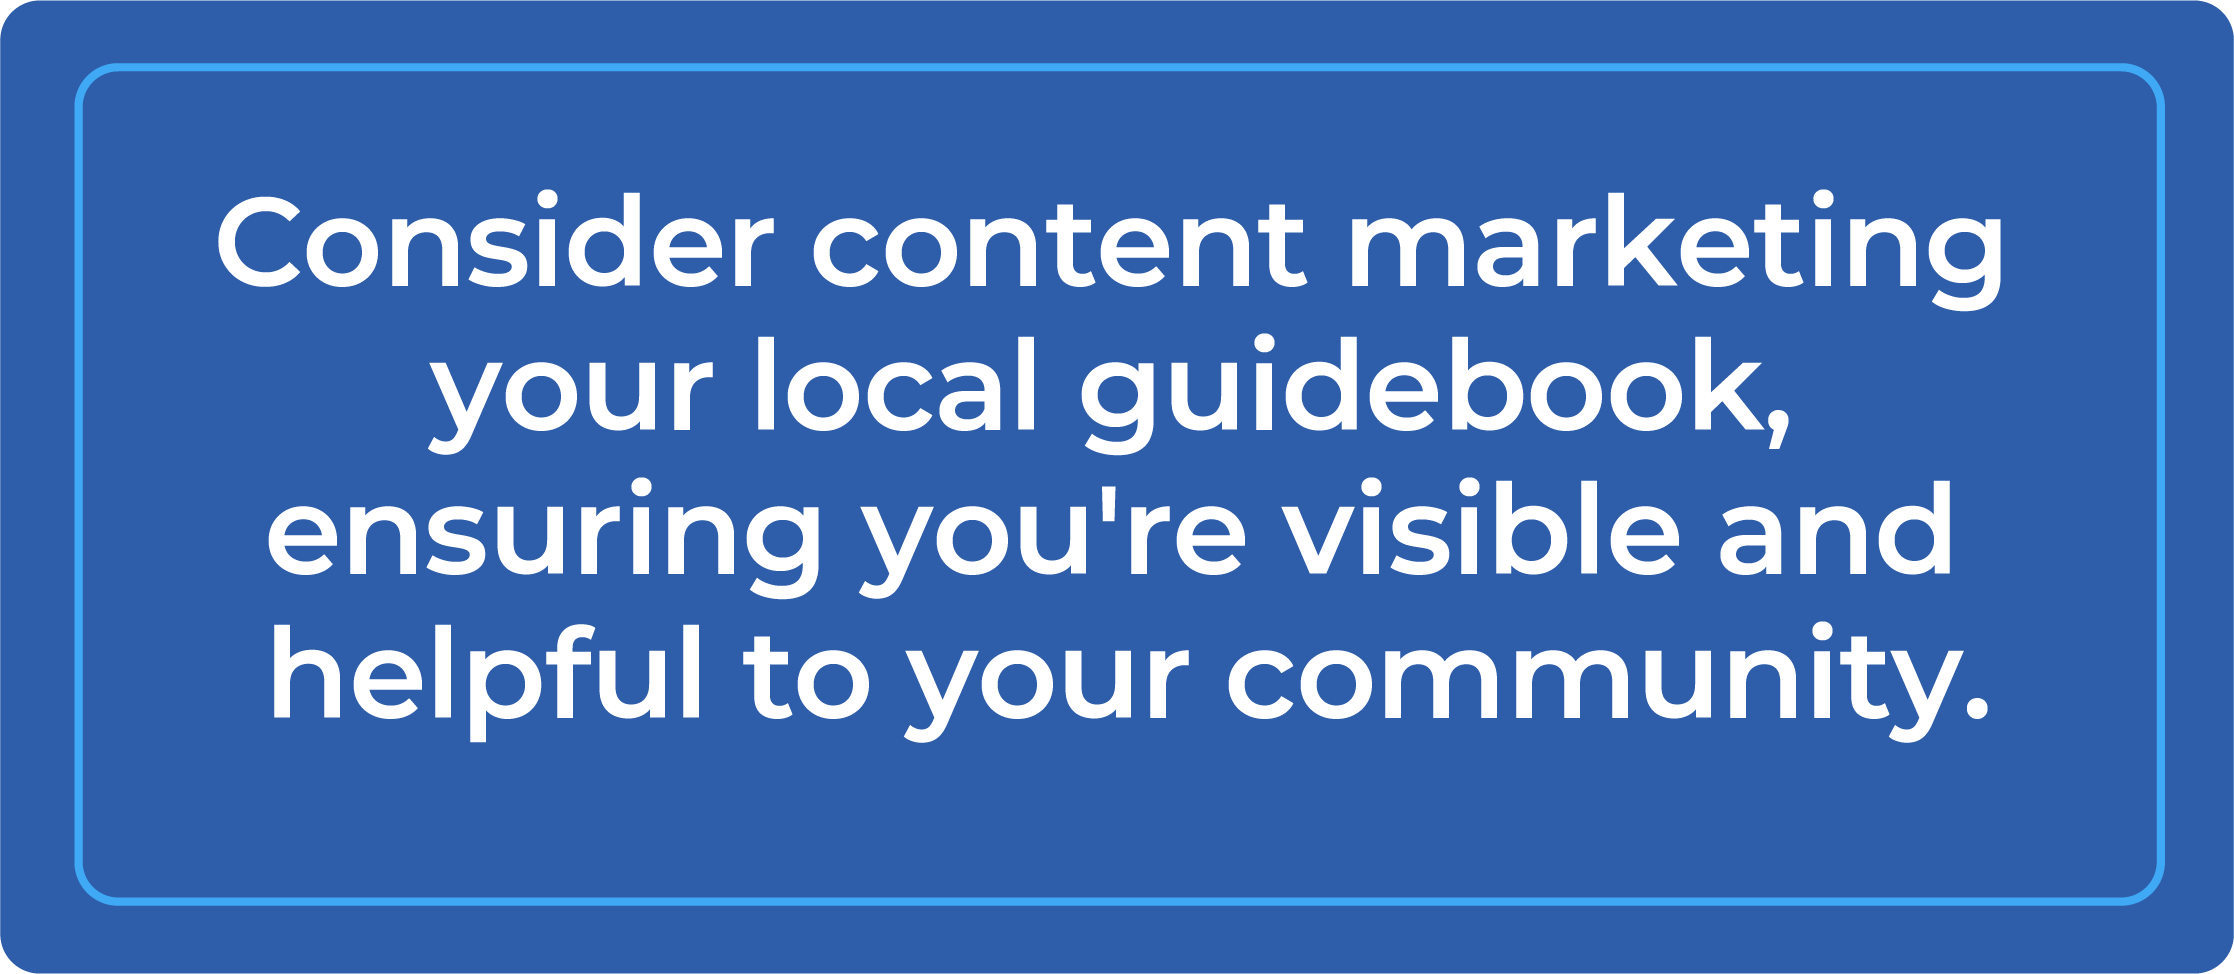 content marketing - local guidebook 